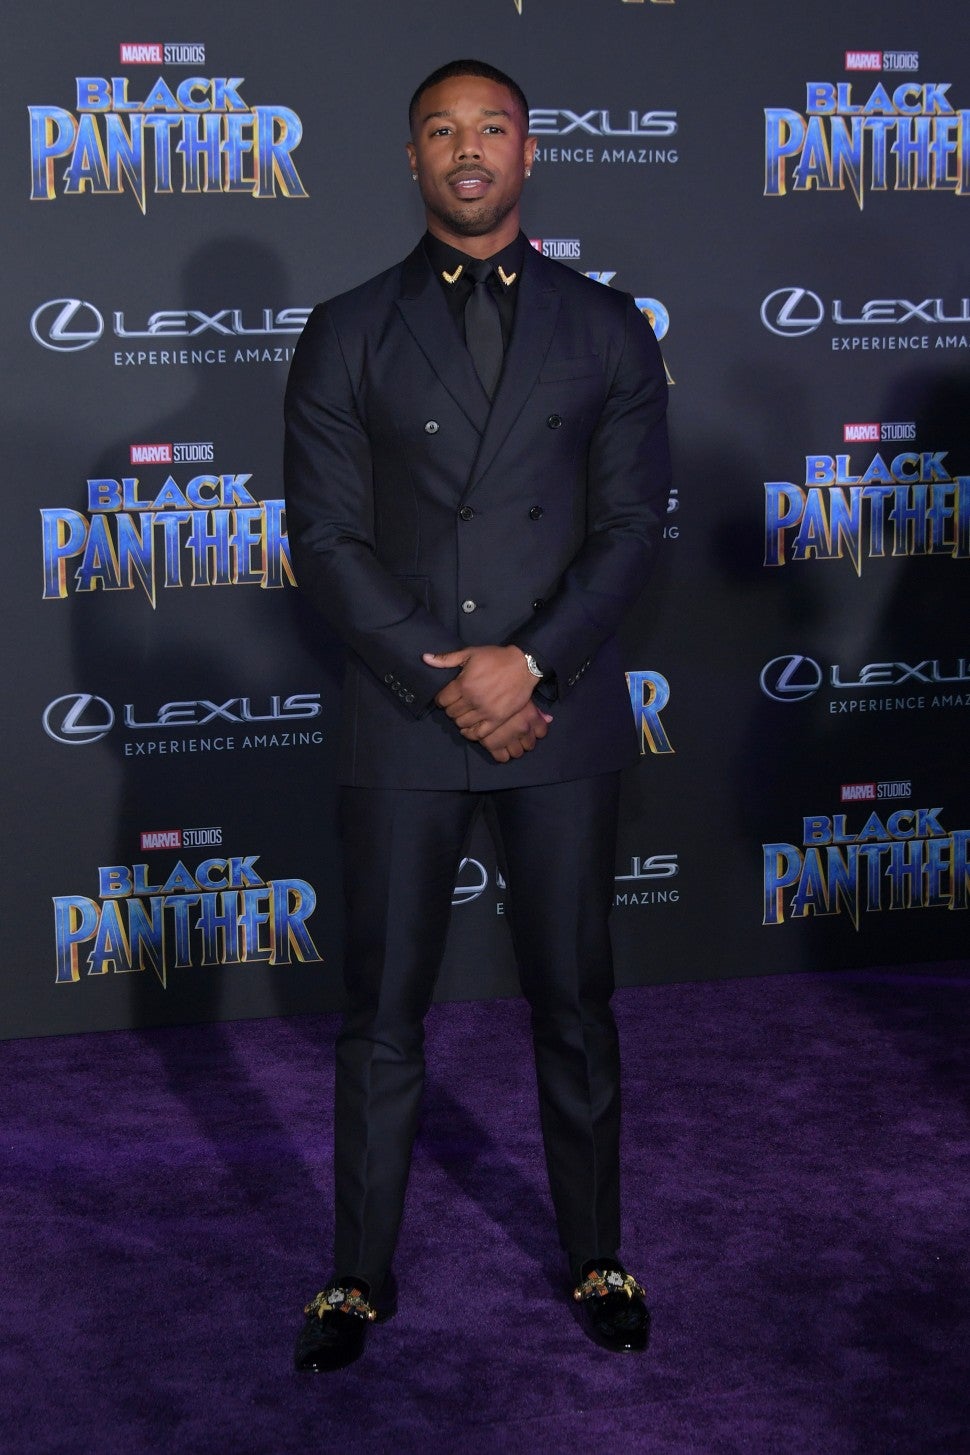 Michael B Jordan at Black Panther premiere